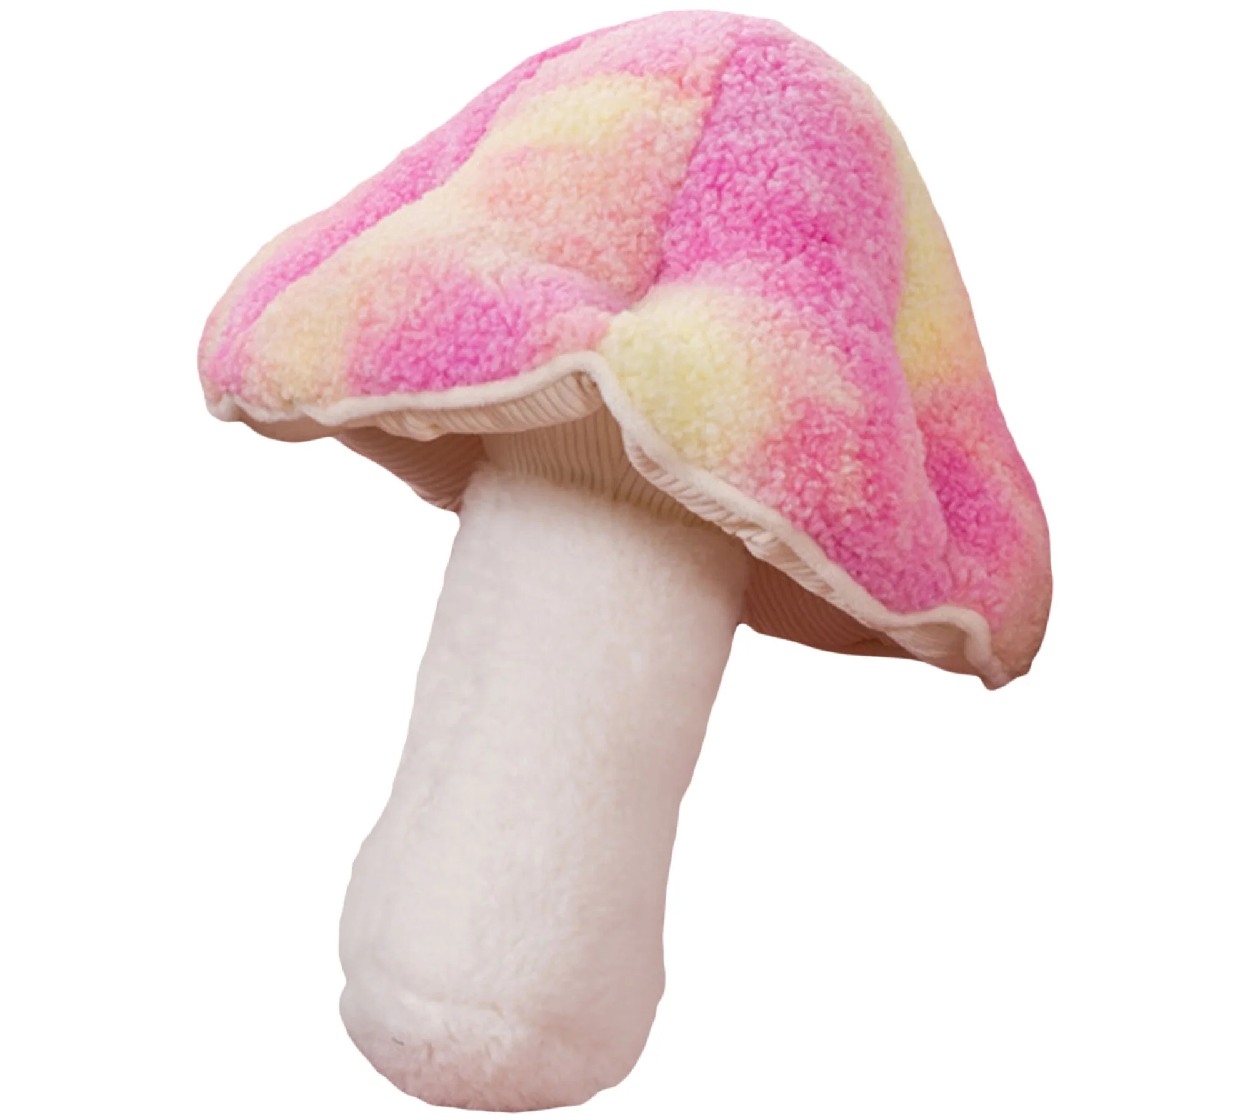 Votuleazi Mushroom Stuffed Doll Plush Pillow Super Soft Sleeping Pillow Gift